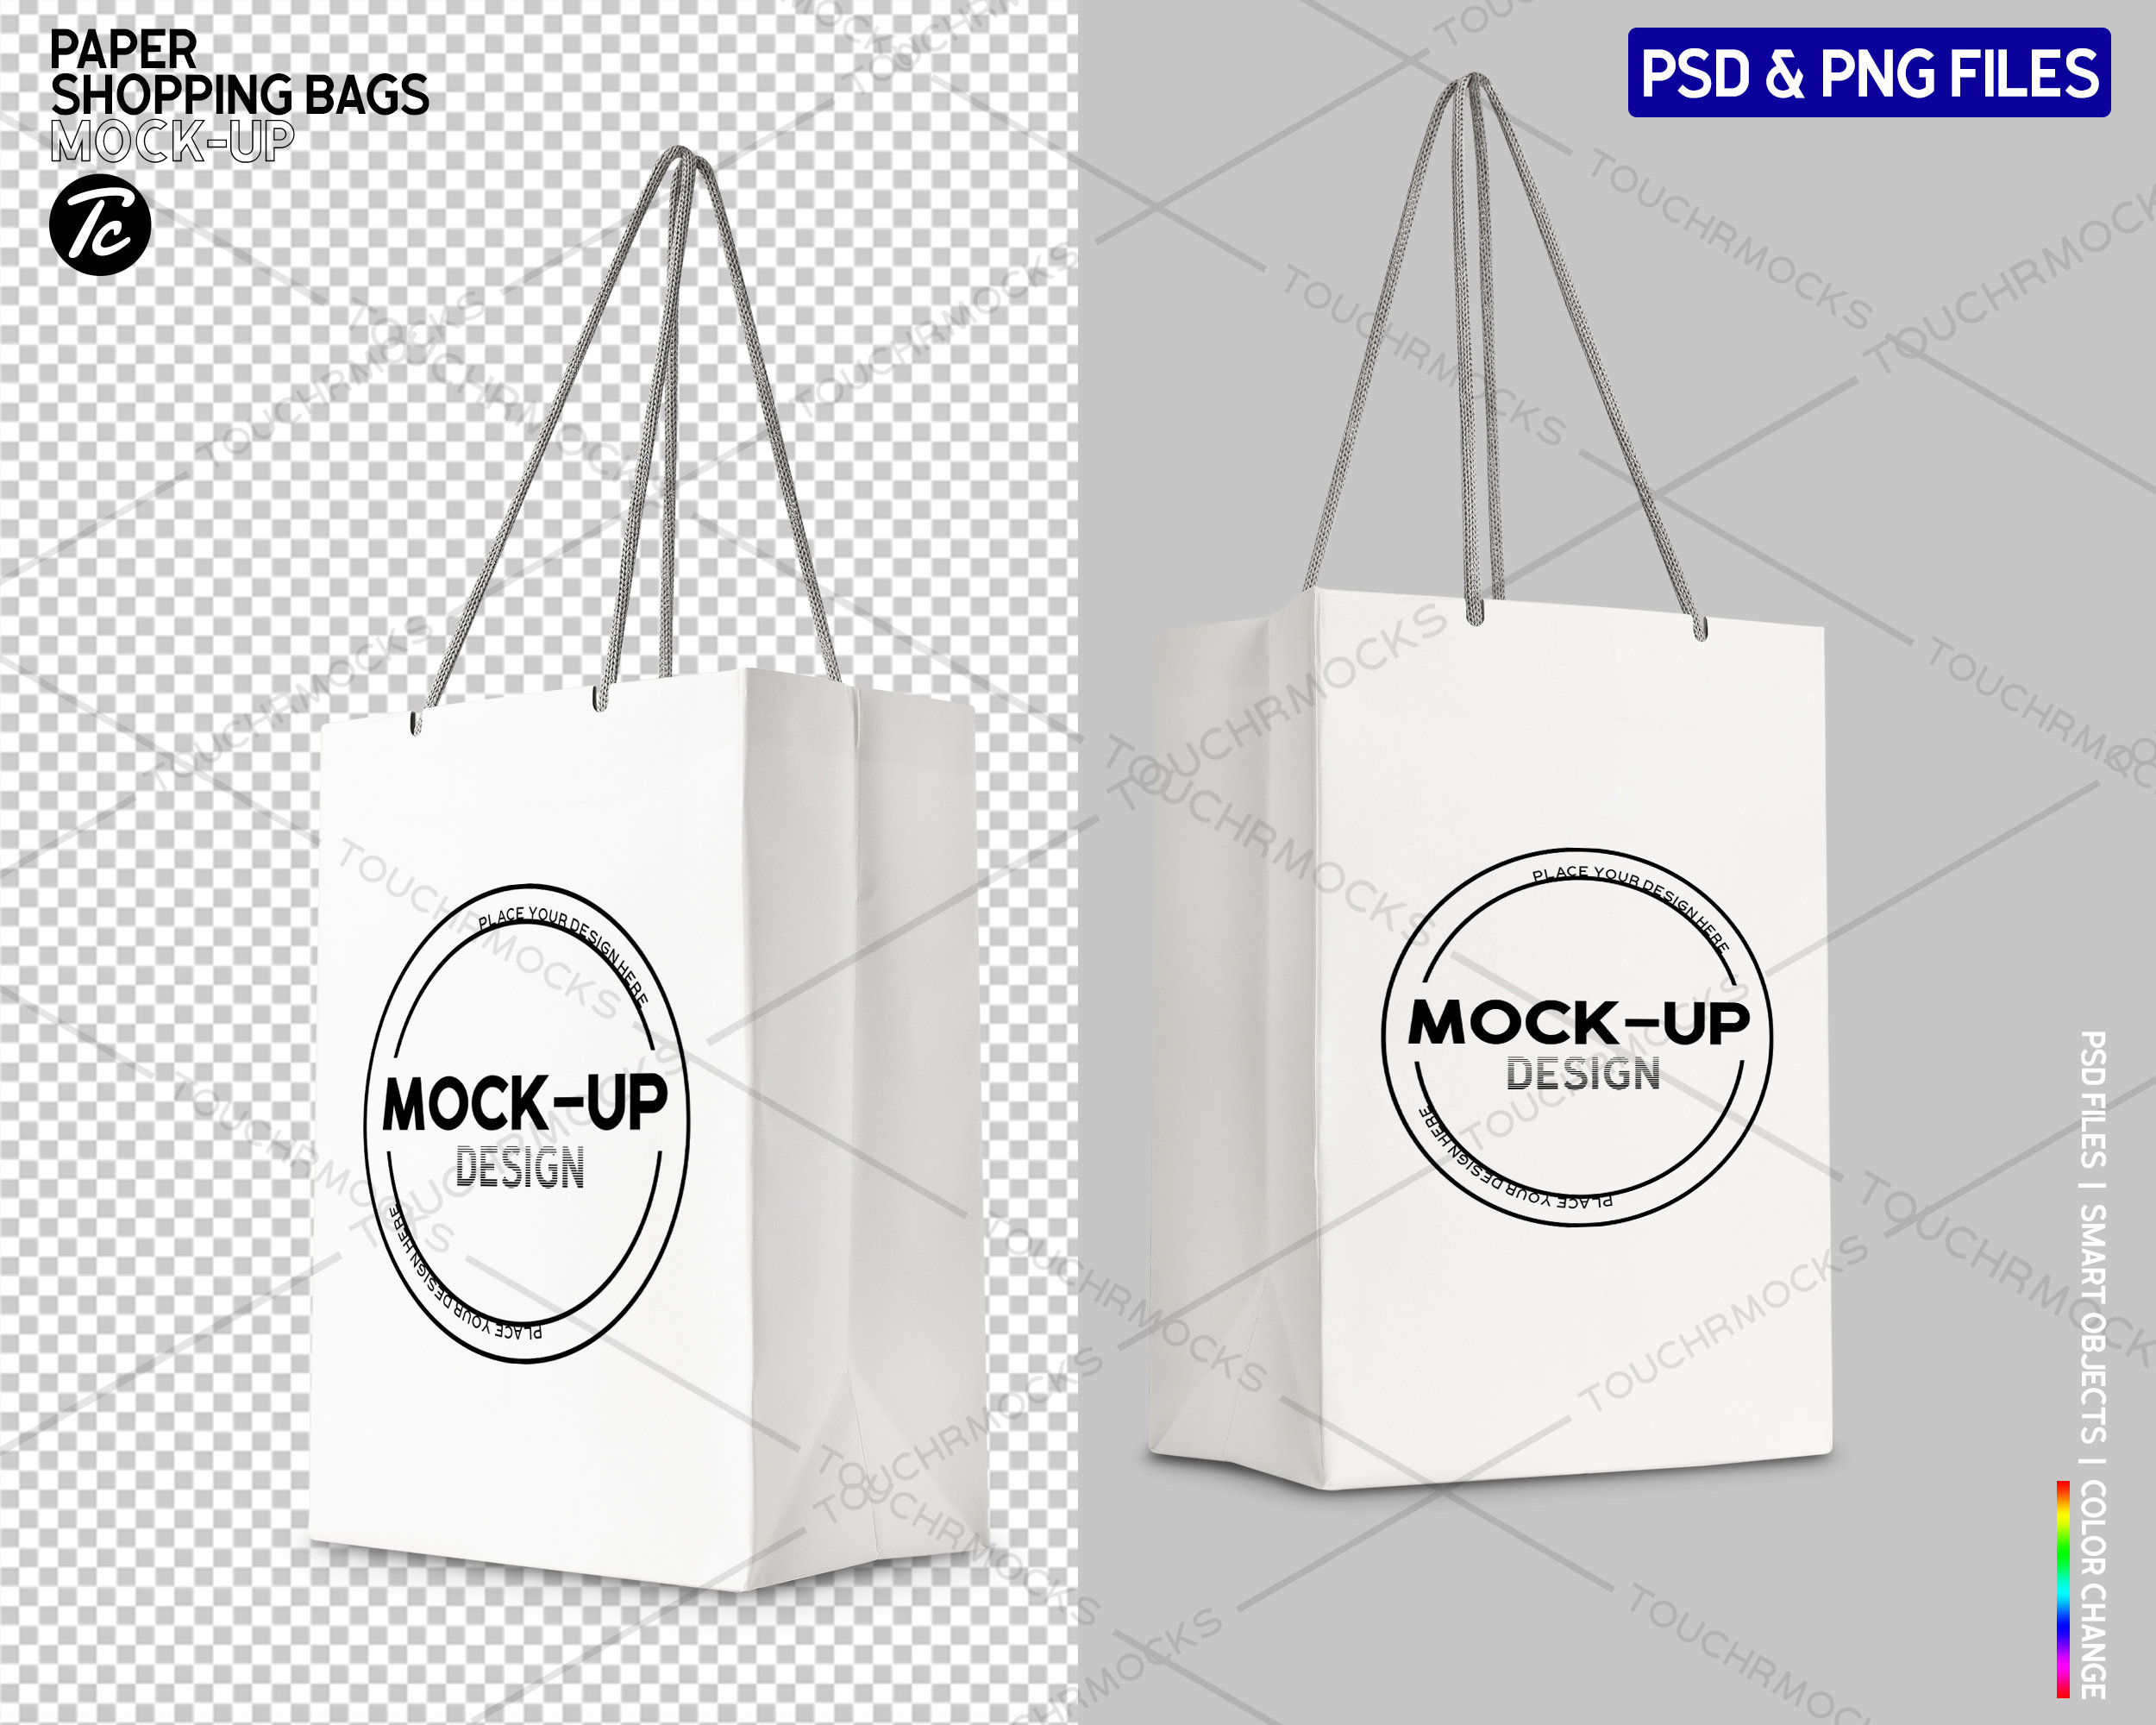 Free Gravity Flying Shopping Bag Mockup (PSD)